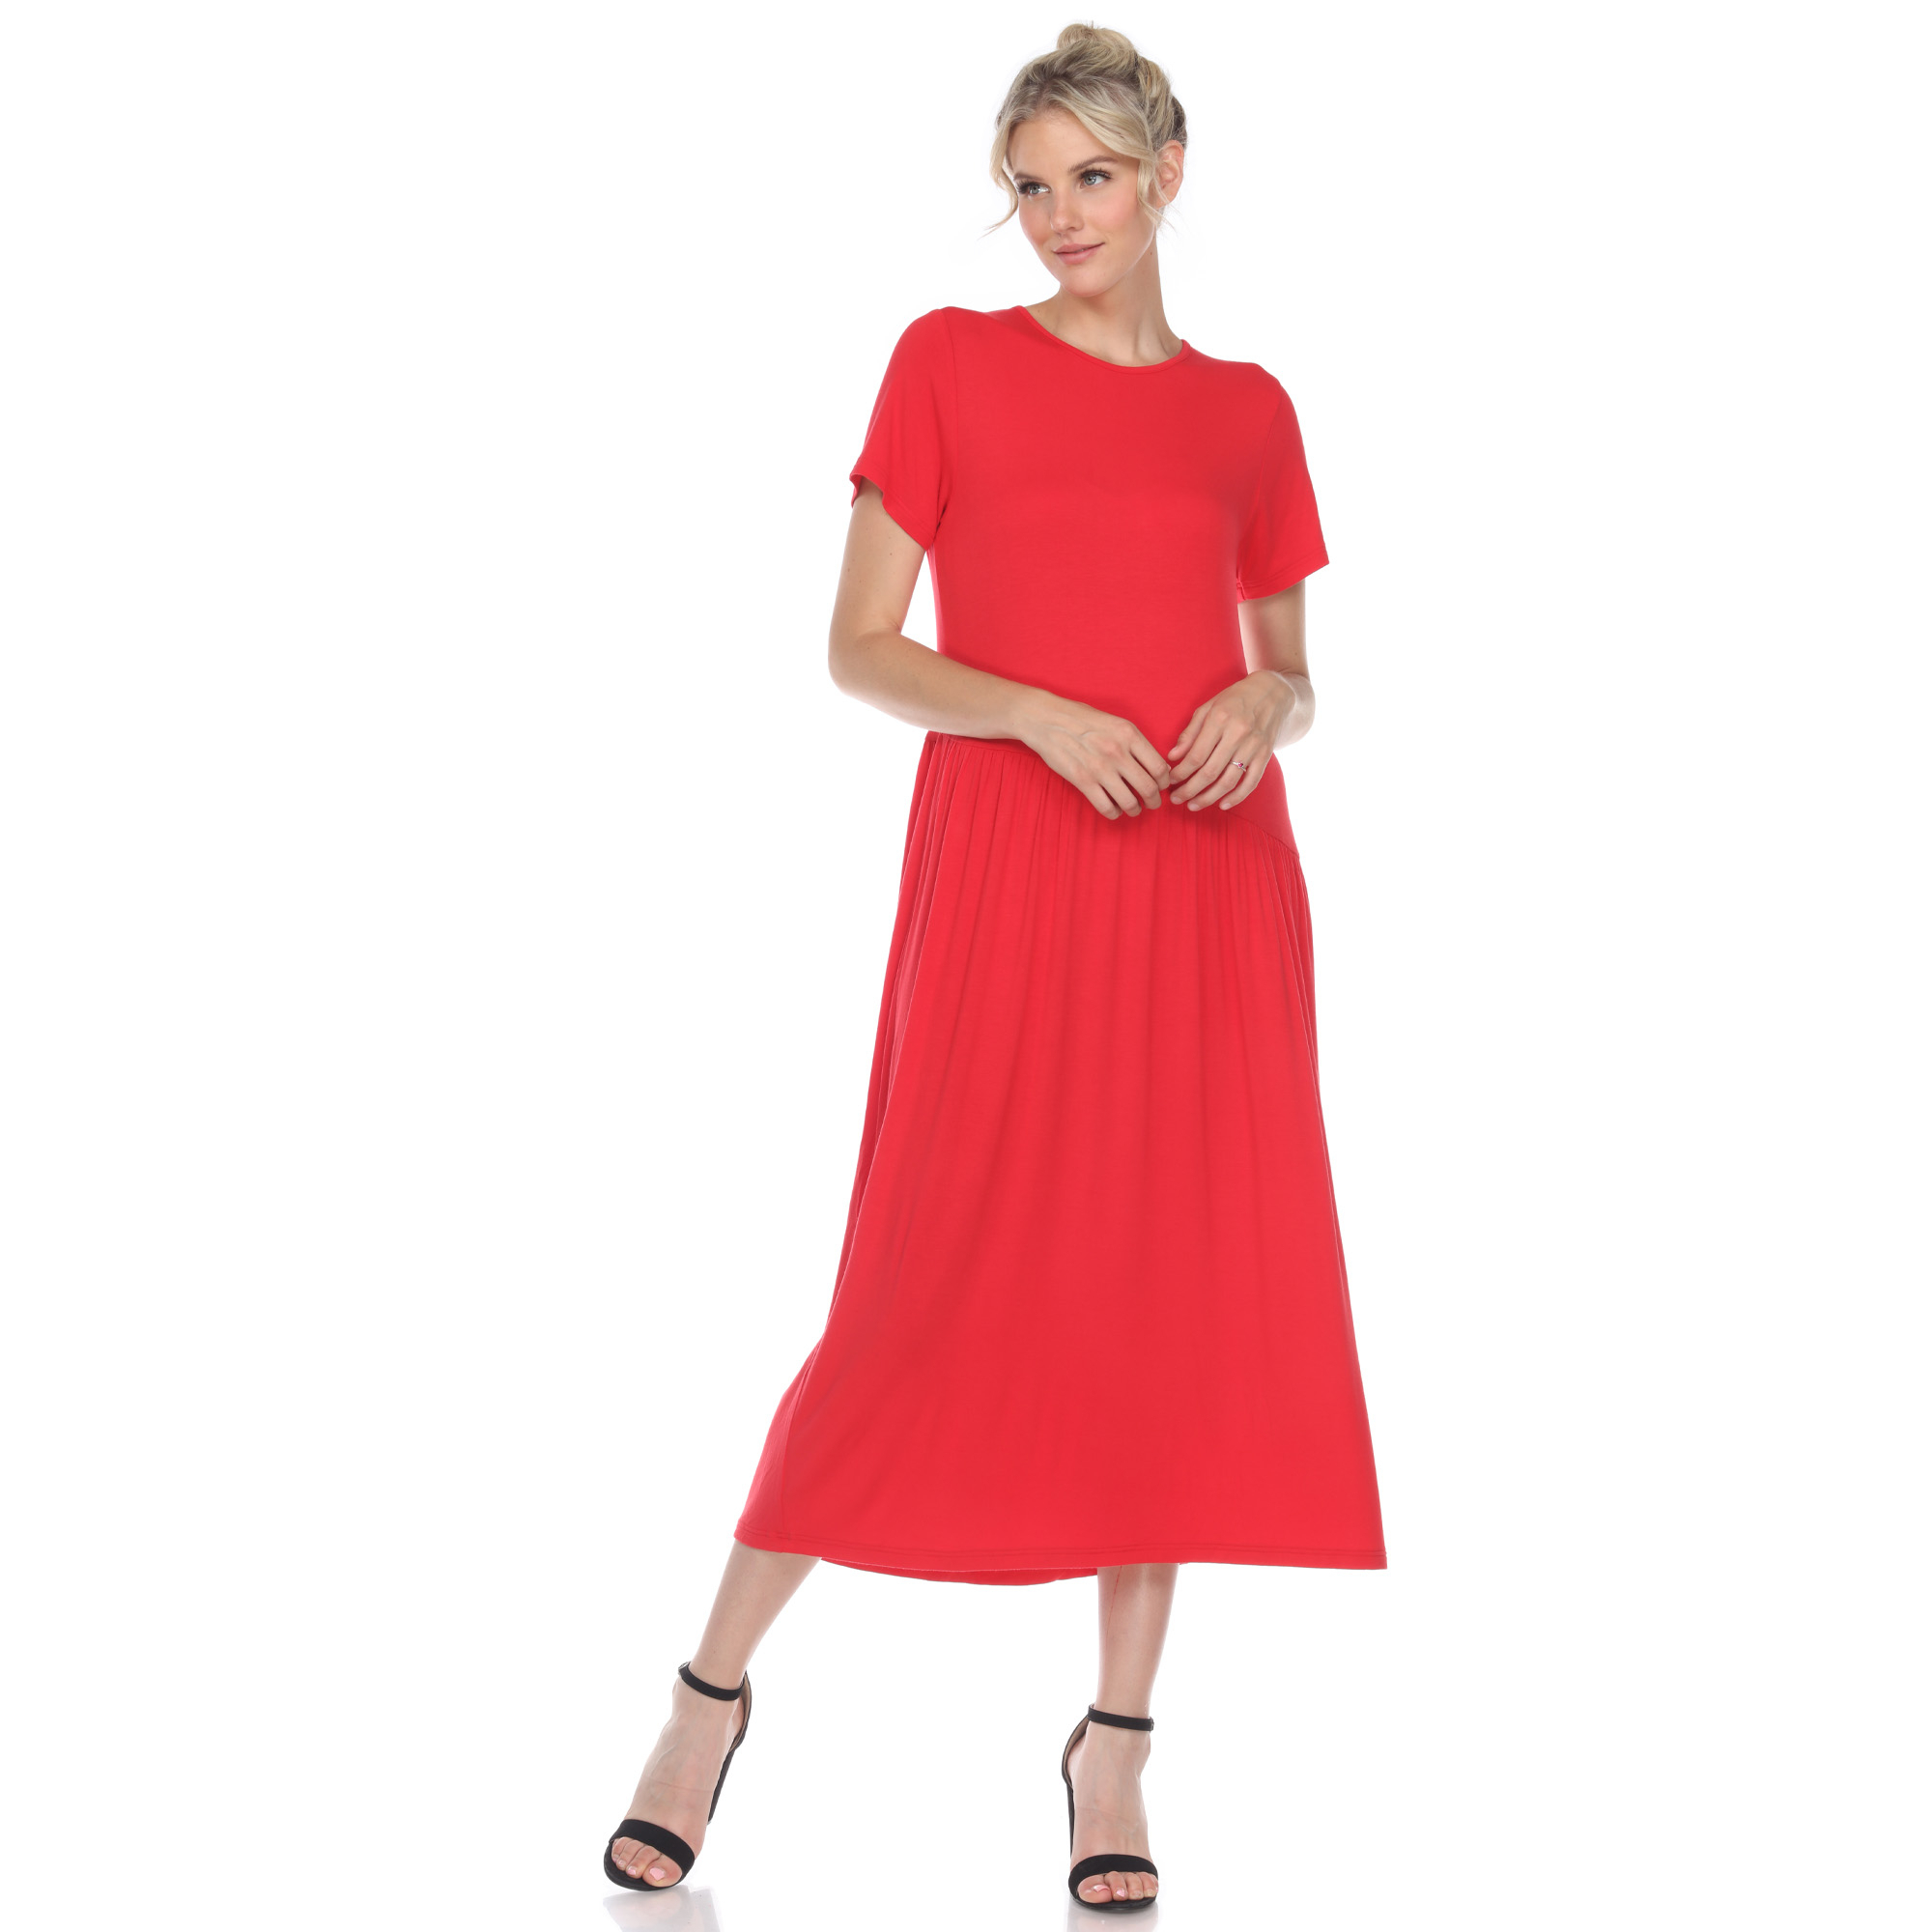 White Mark Womenâs Short Sleeve Maxi Dress - Red, Medium